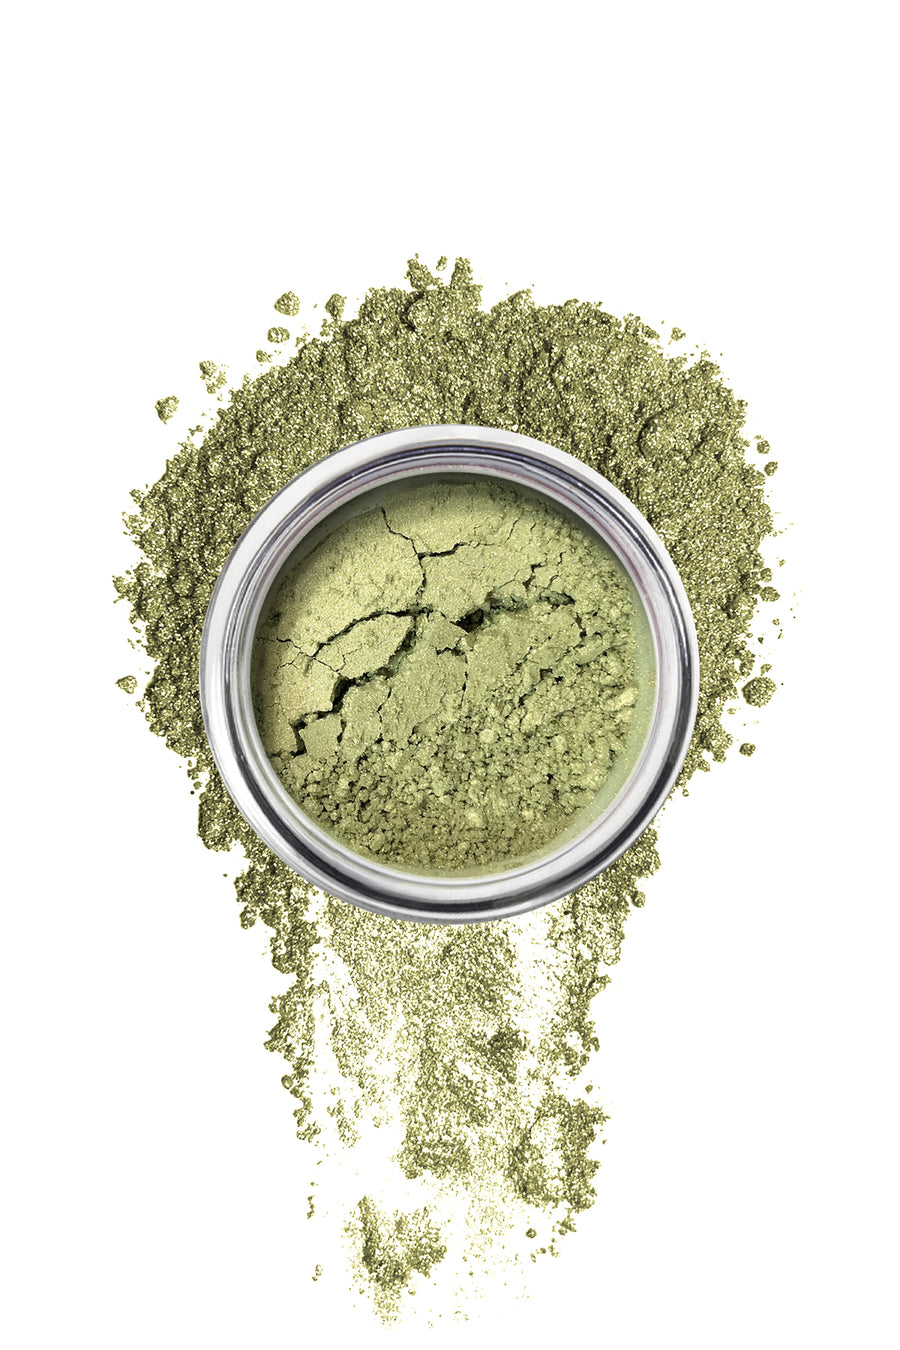 Shimmer Eyeshadow #33 - Warm Green - Blend Mineral Cosmetics